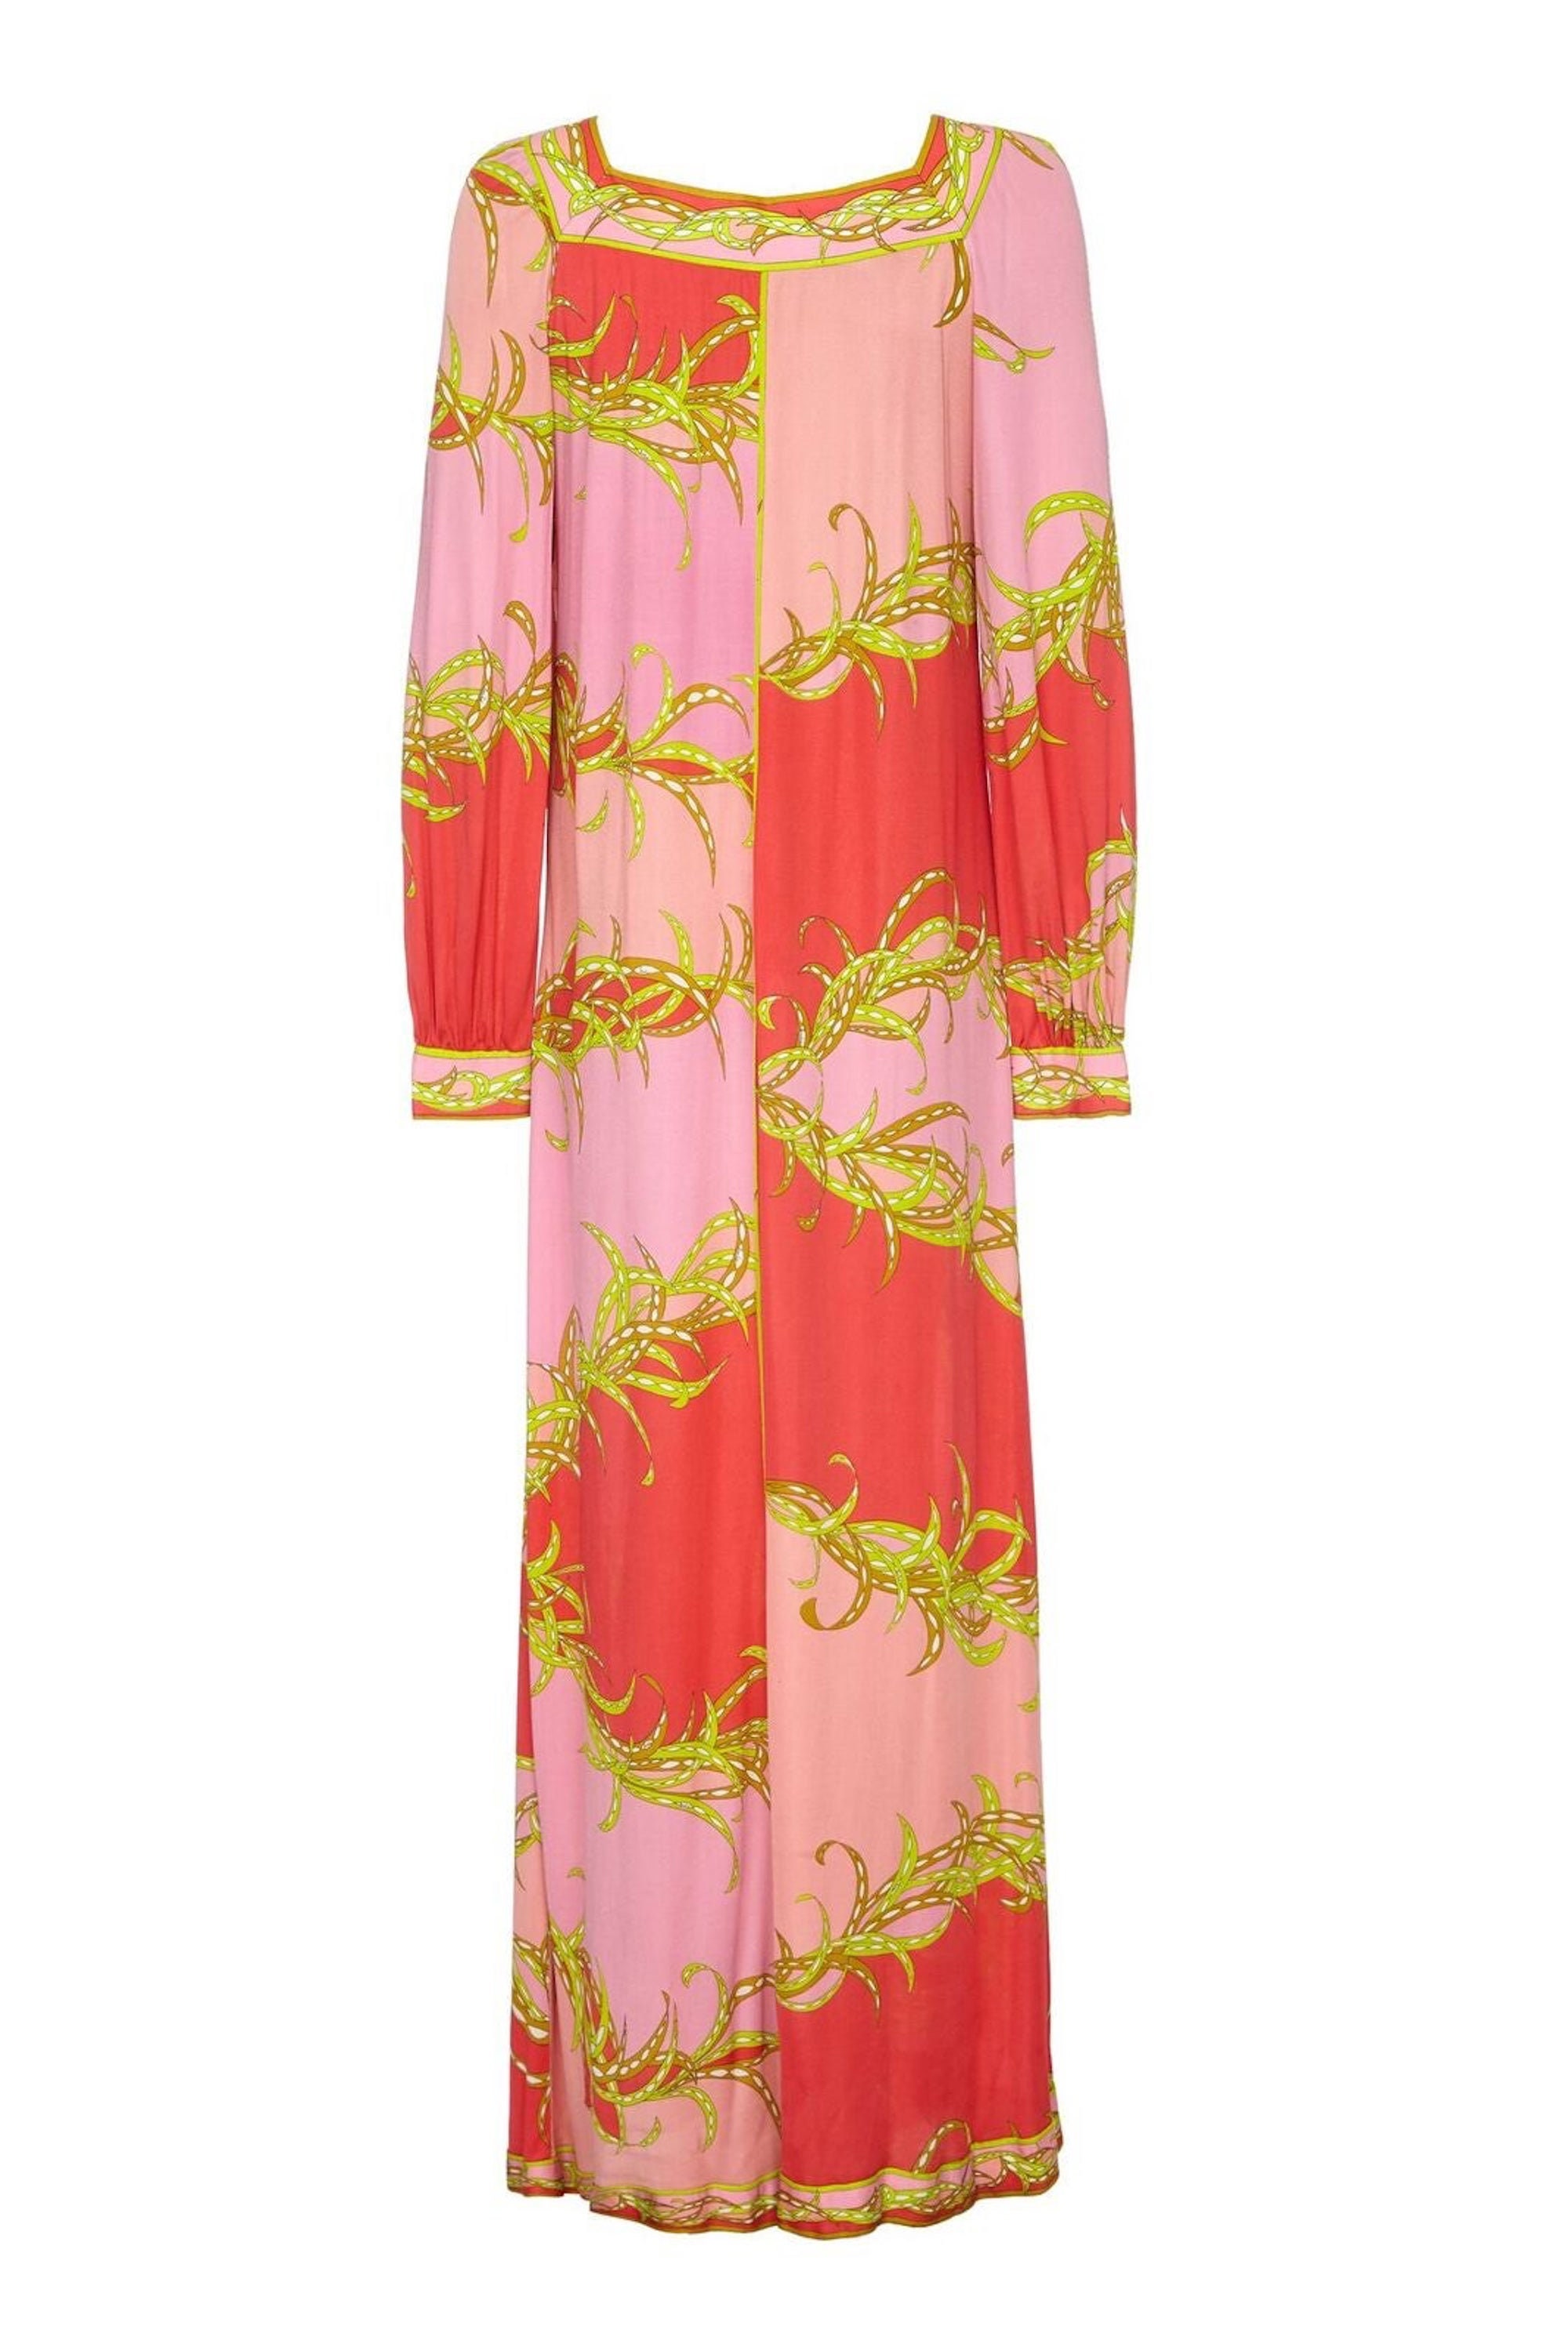 Emilio Pucci 1970s Silk Blend Tropical Print Lounge Dress - Etsy UK